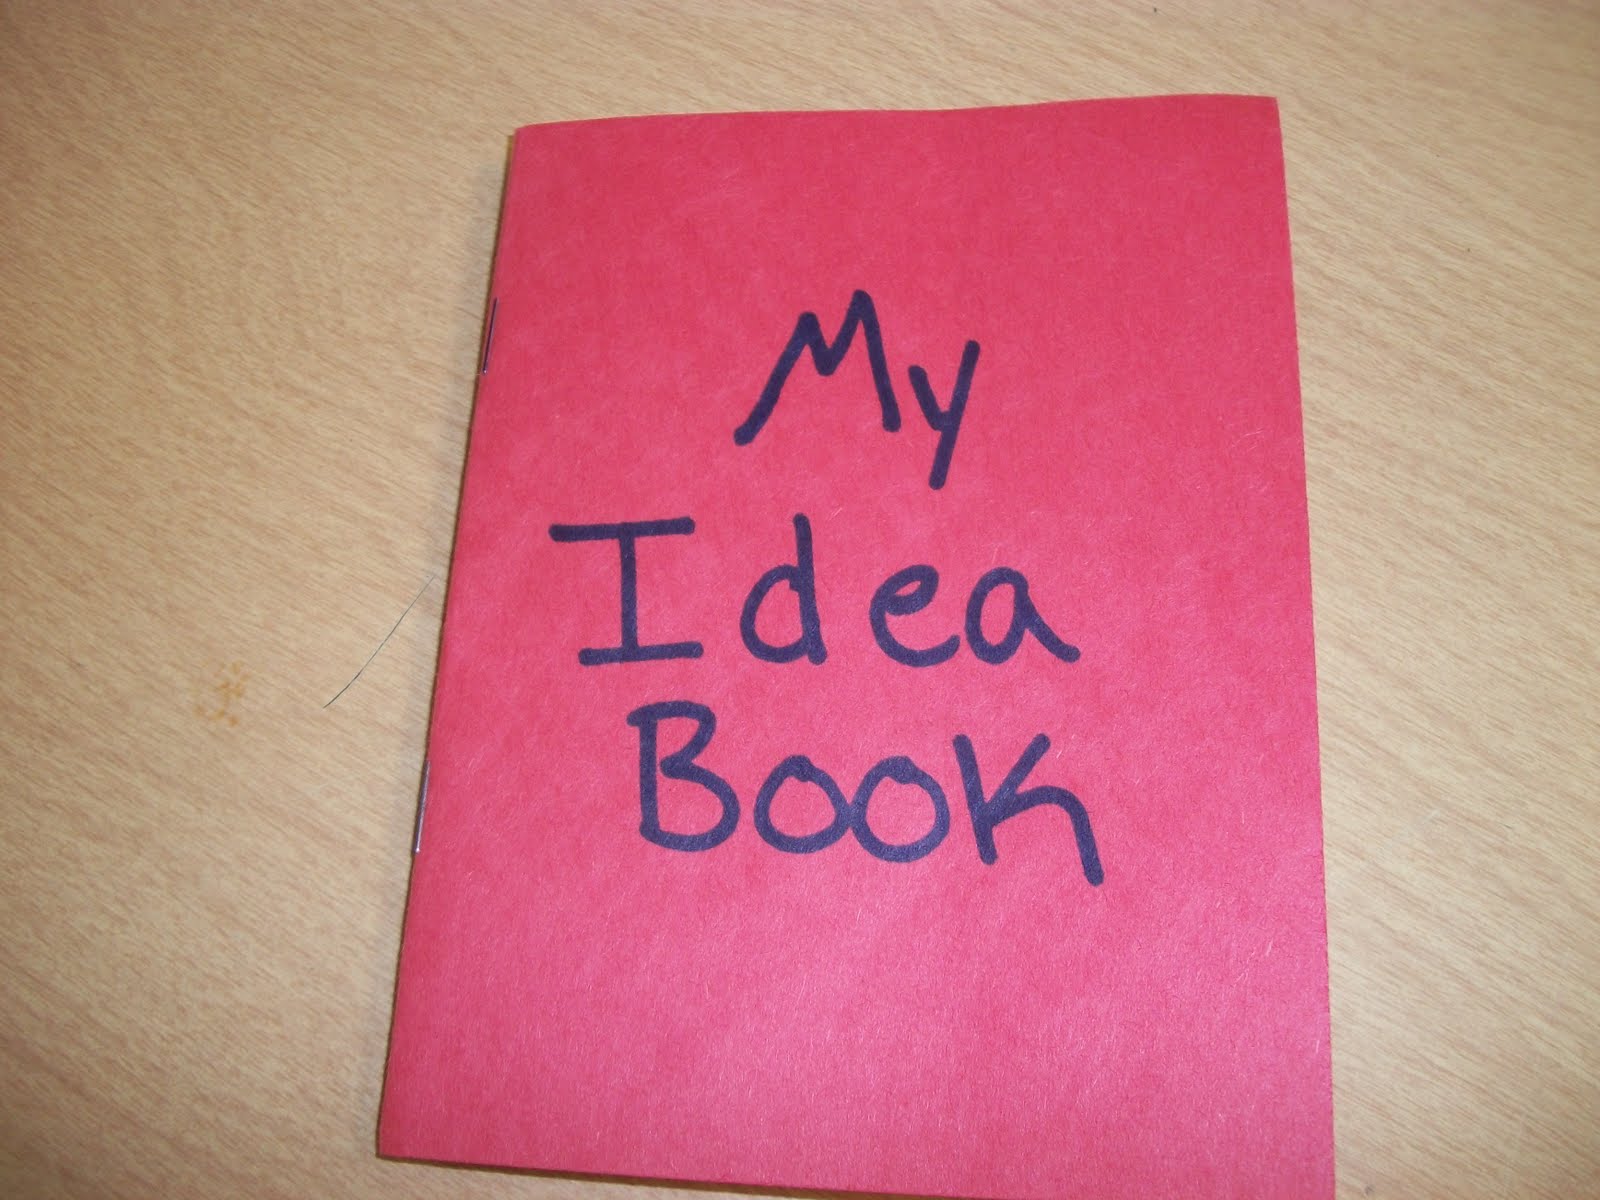 A Deeper Look: Idea Books